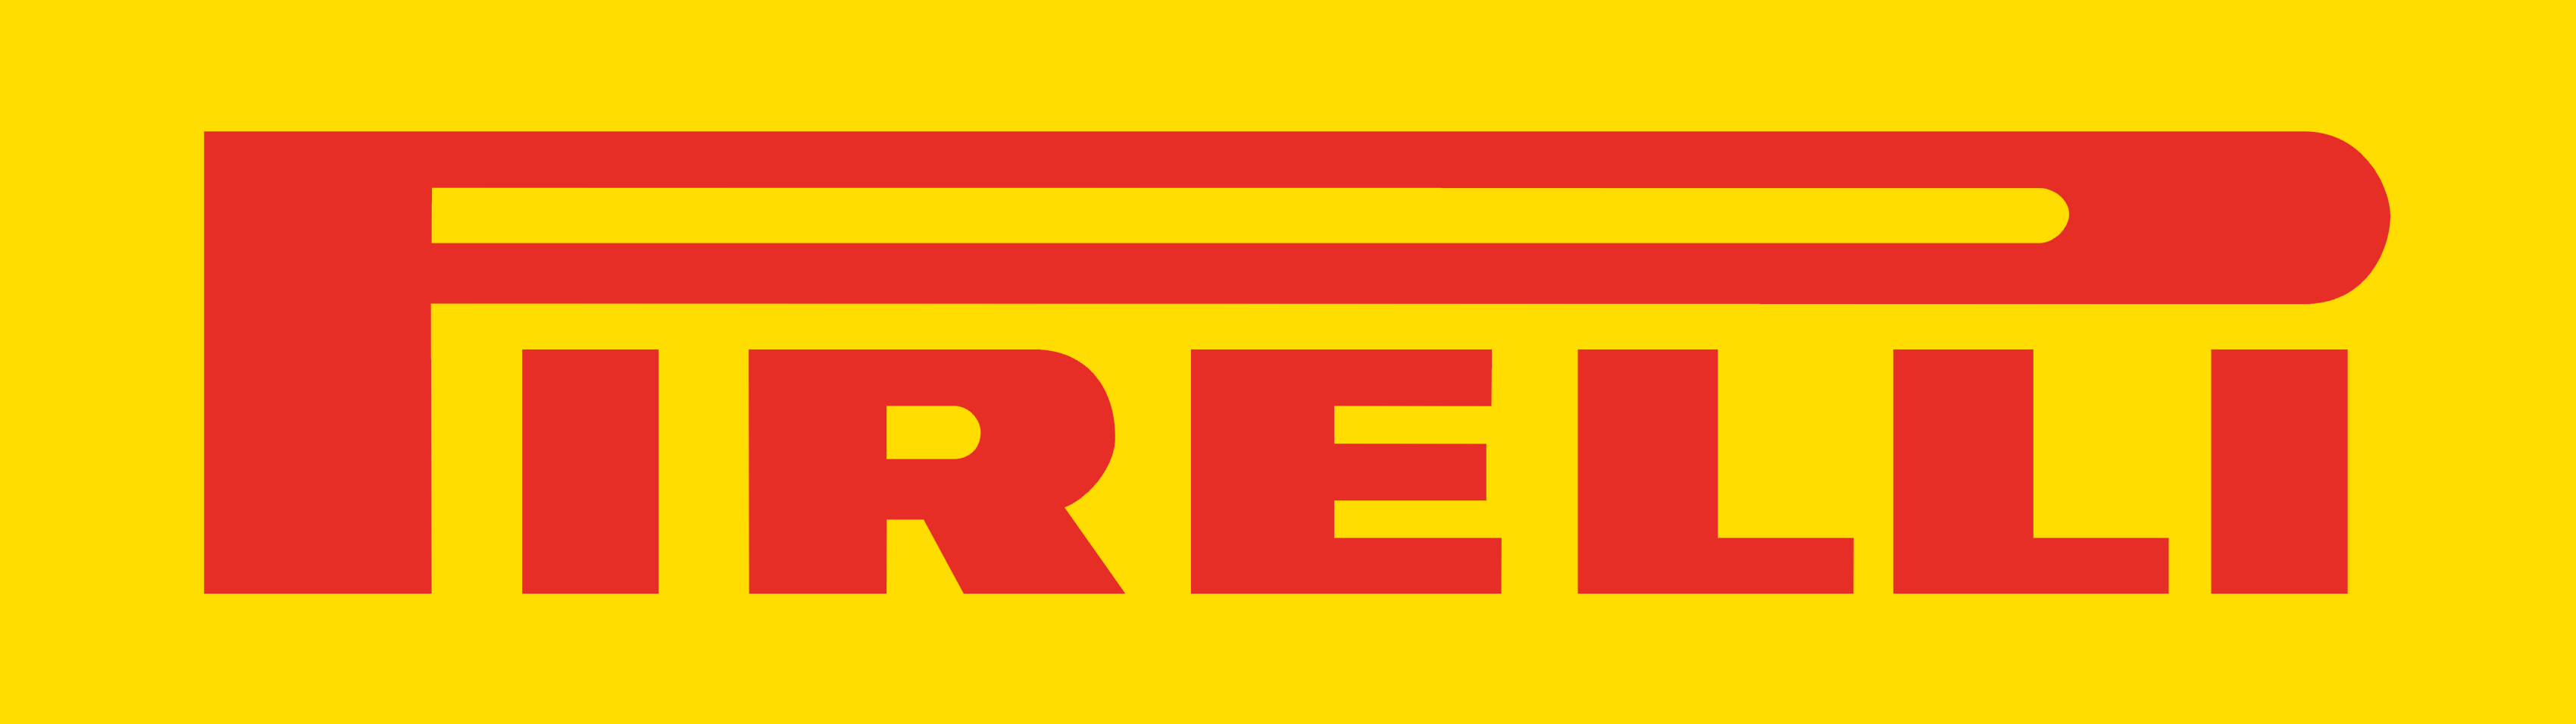 pirelli-logo-3400×955